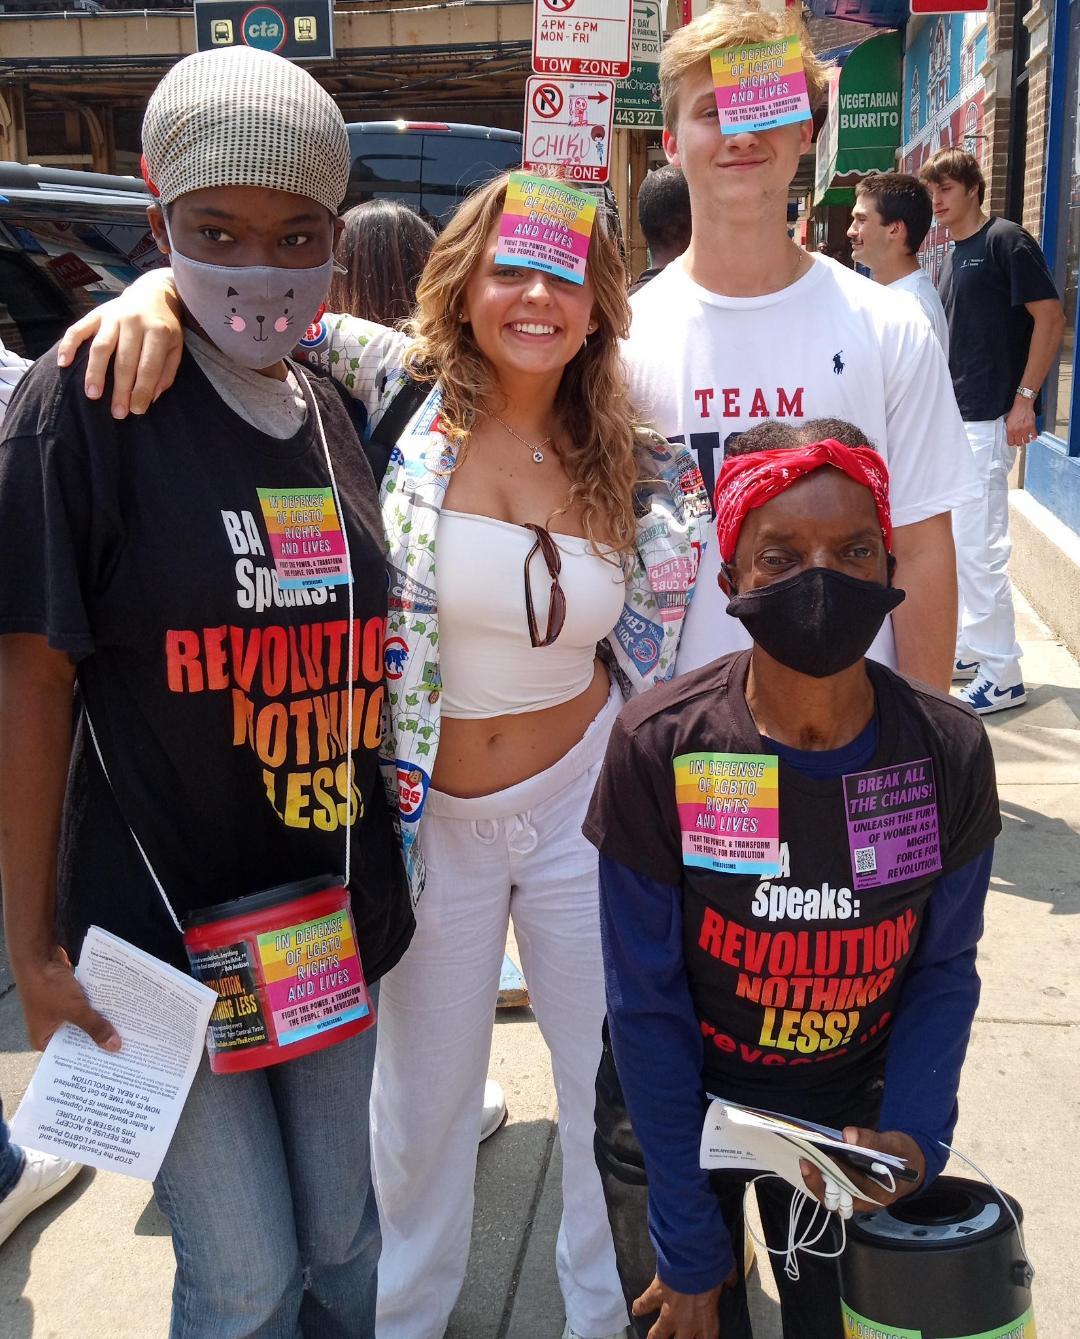 Revolution Club Crew at the Pride Fest in Chicago 